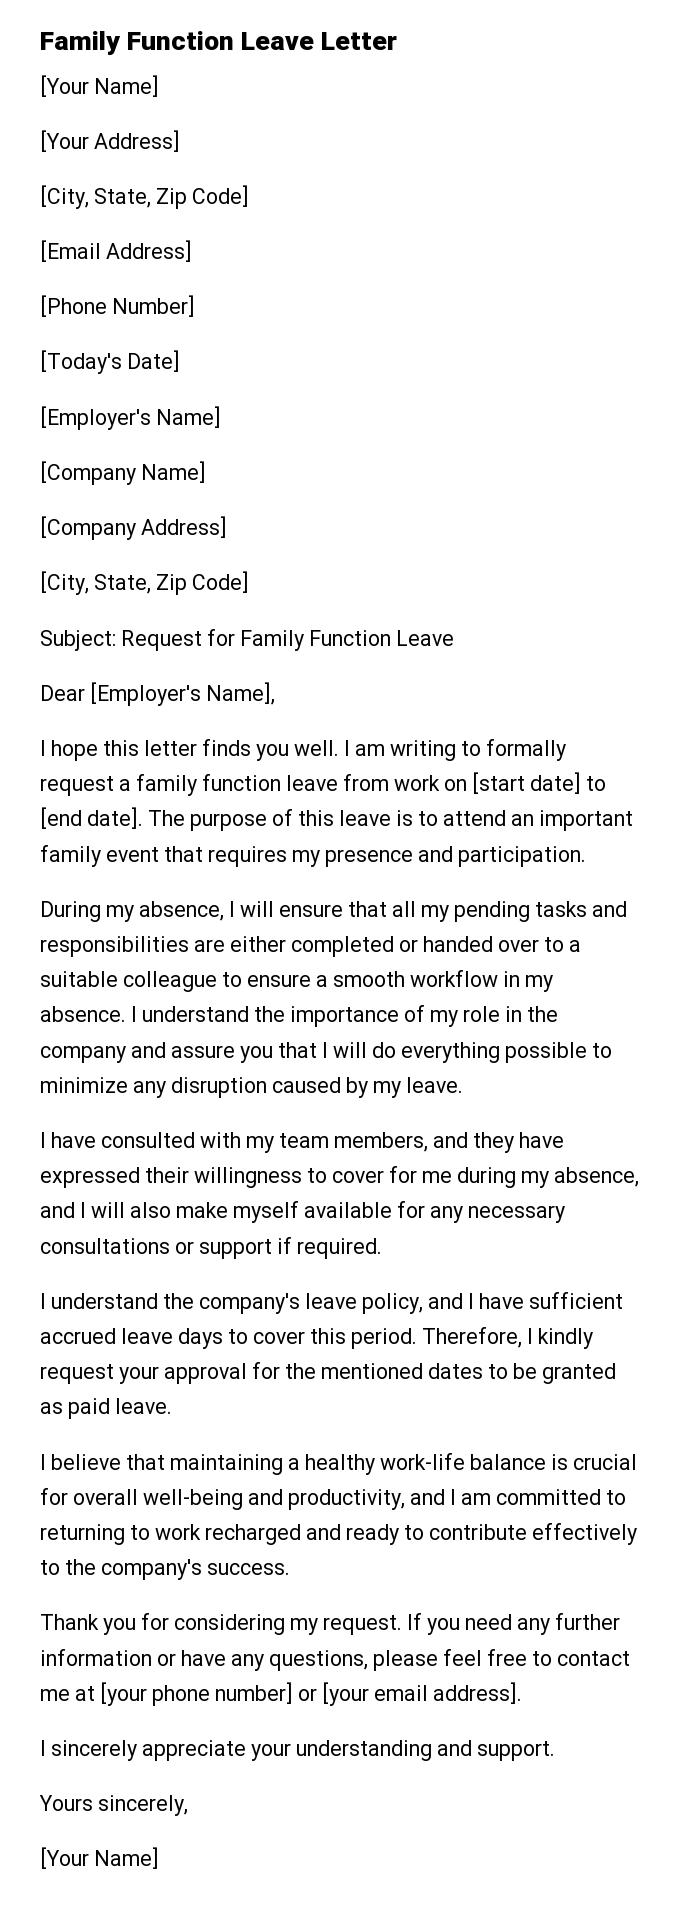 Family Function Leave Letter